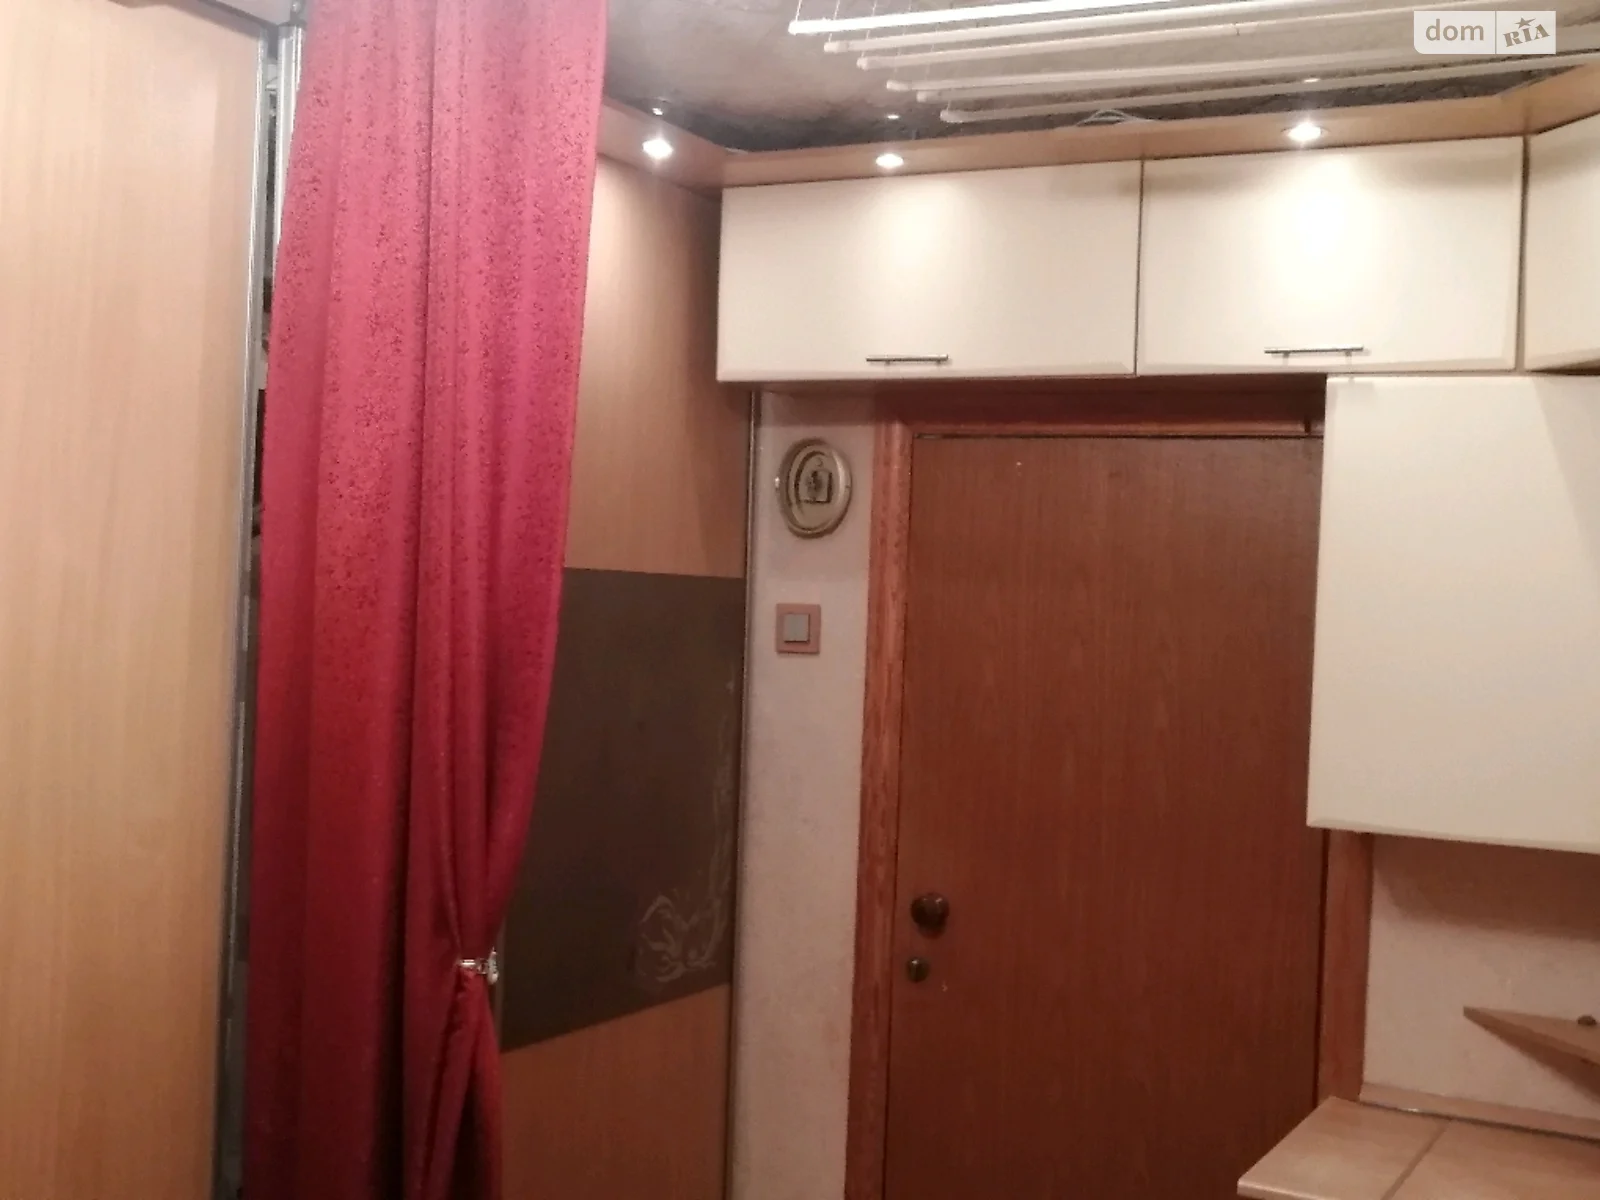 Продается комната 16 кв. м в Киеве, цена: 14100 $ - фото 1